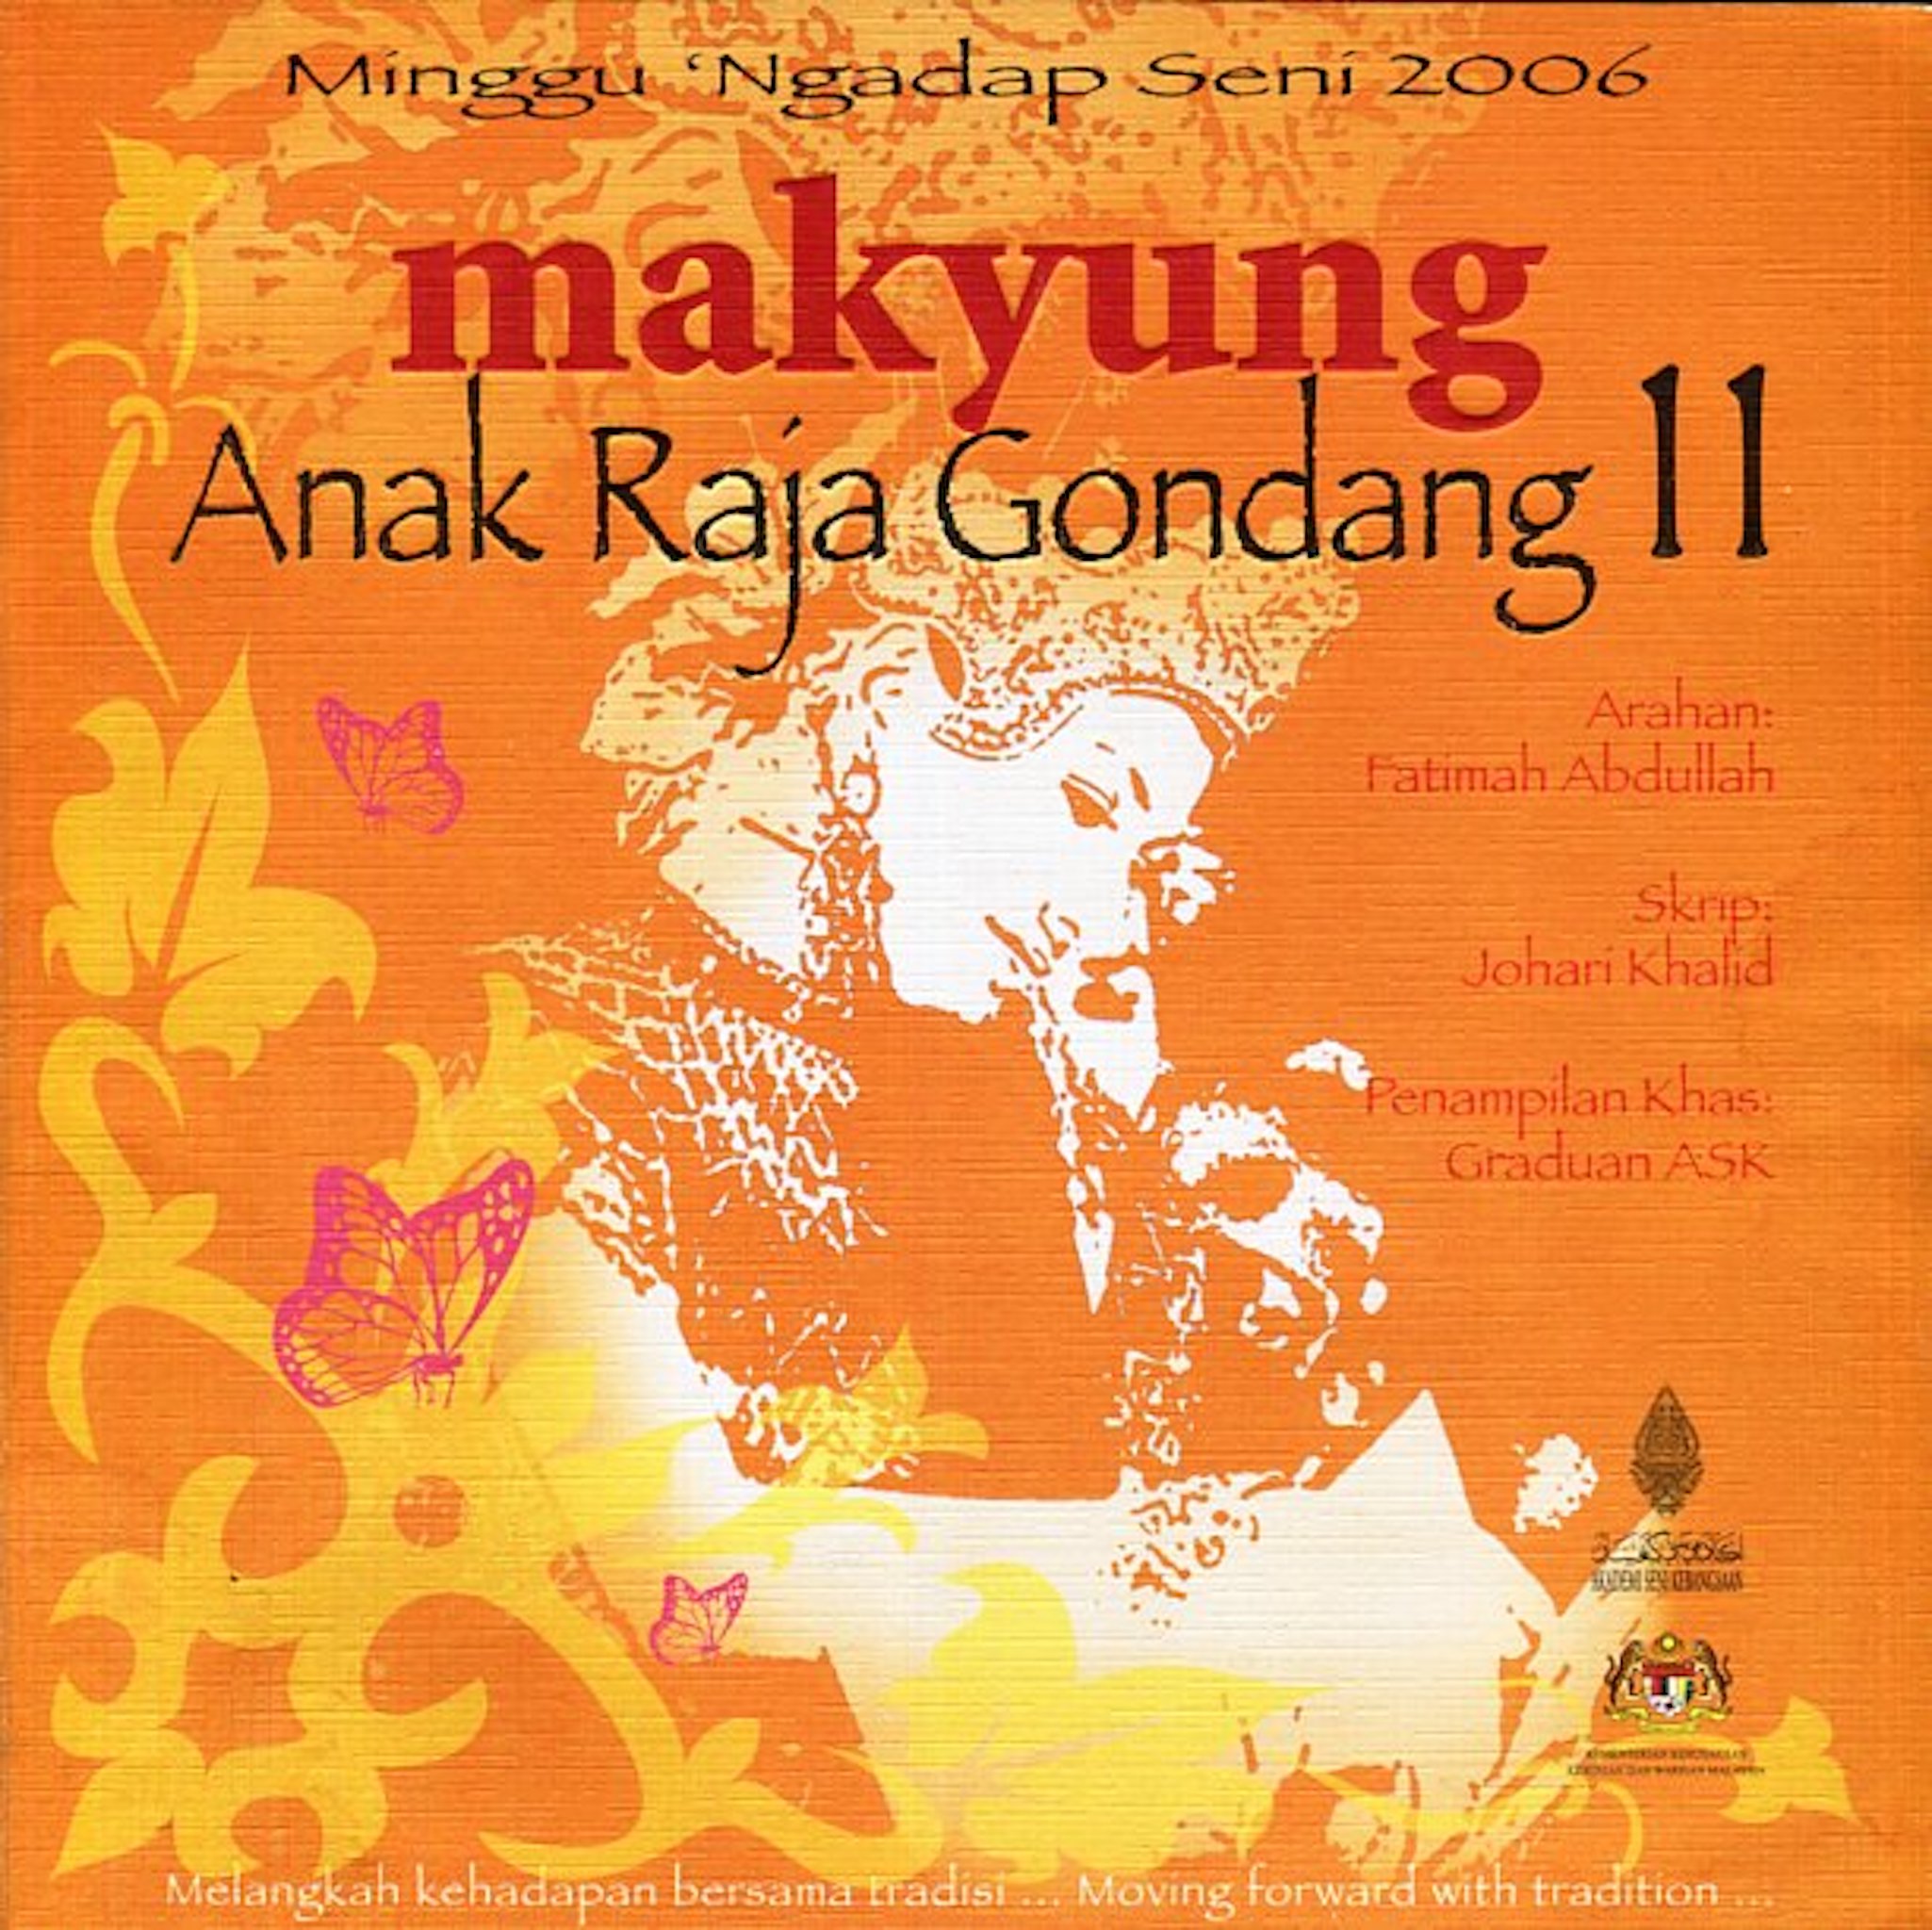 2006 Makyung Anak Raja Gondang 2 cover